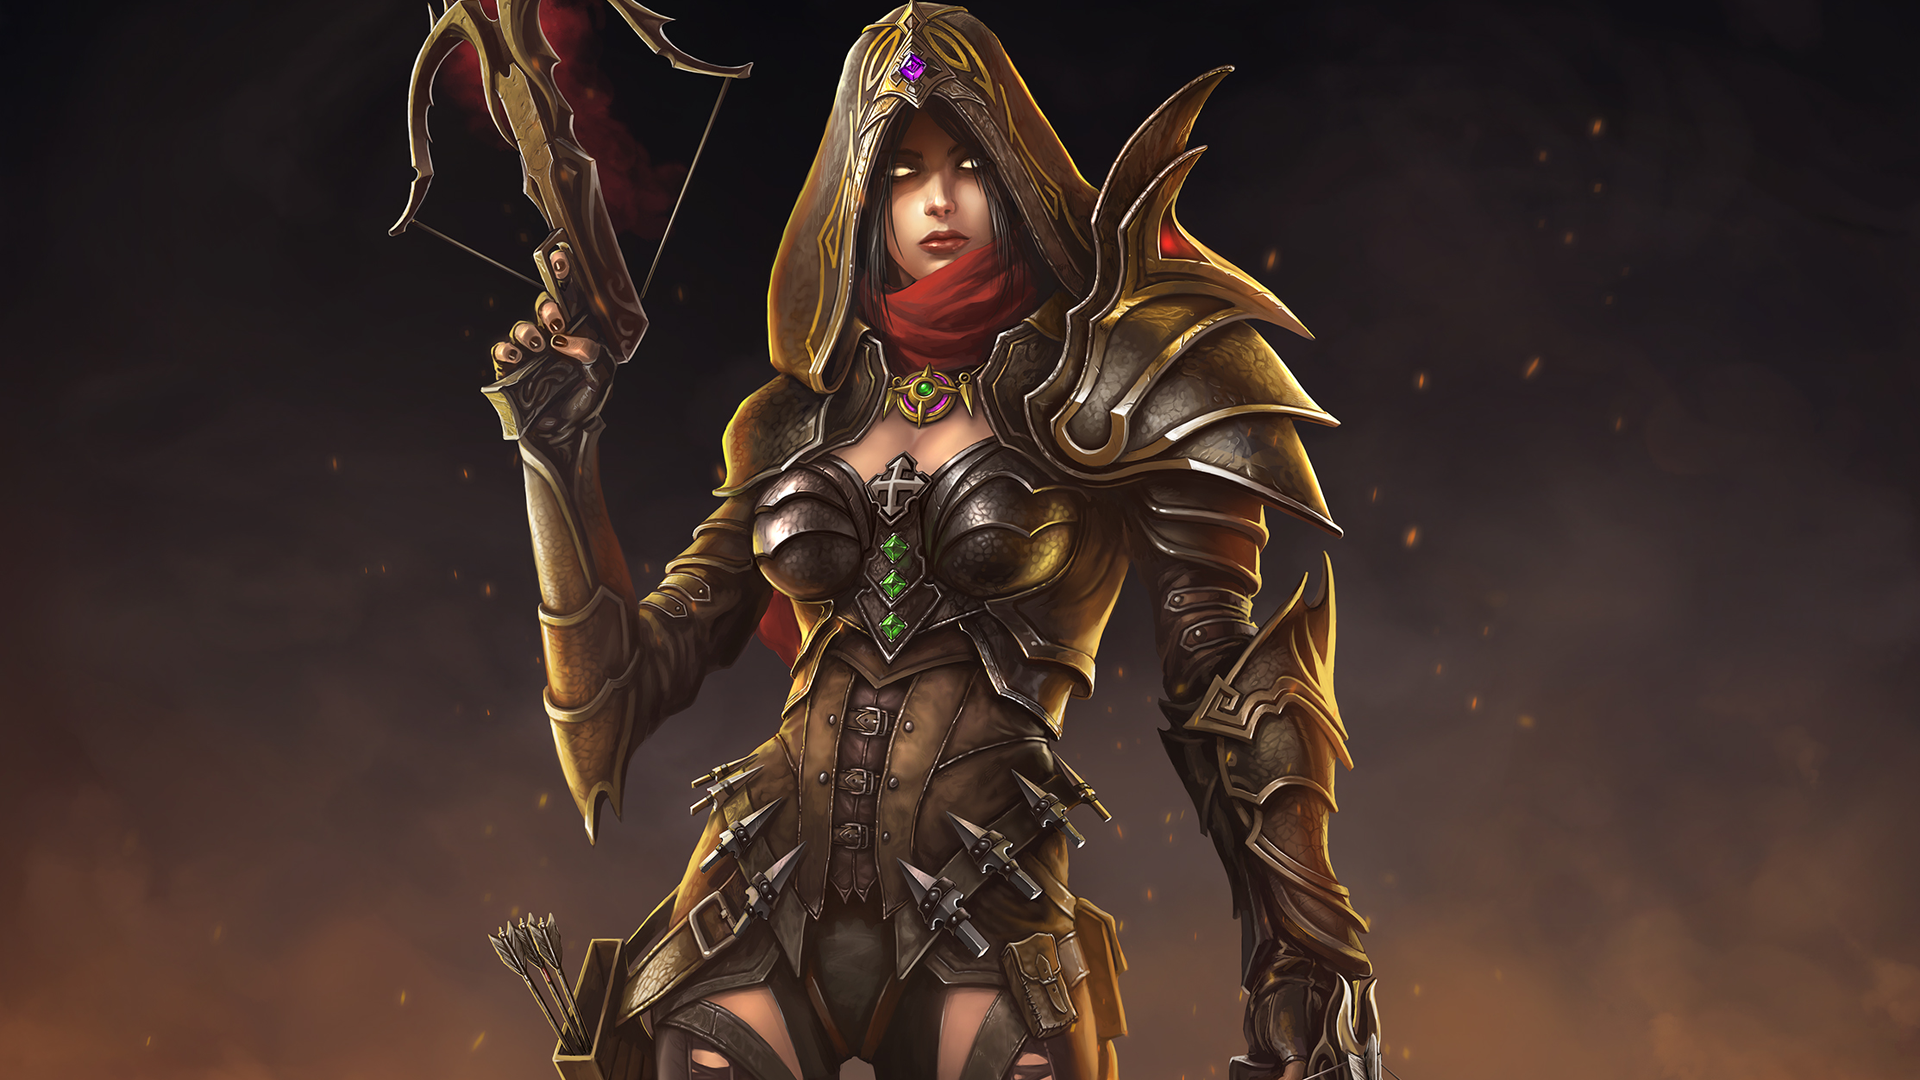 General 1920x1080 women fantasy art Diablo III video games Demon Hunter (Diablo) Valla PC gaming video game girls fantasy armor glowing eyes hoods fantasy girl